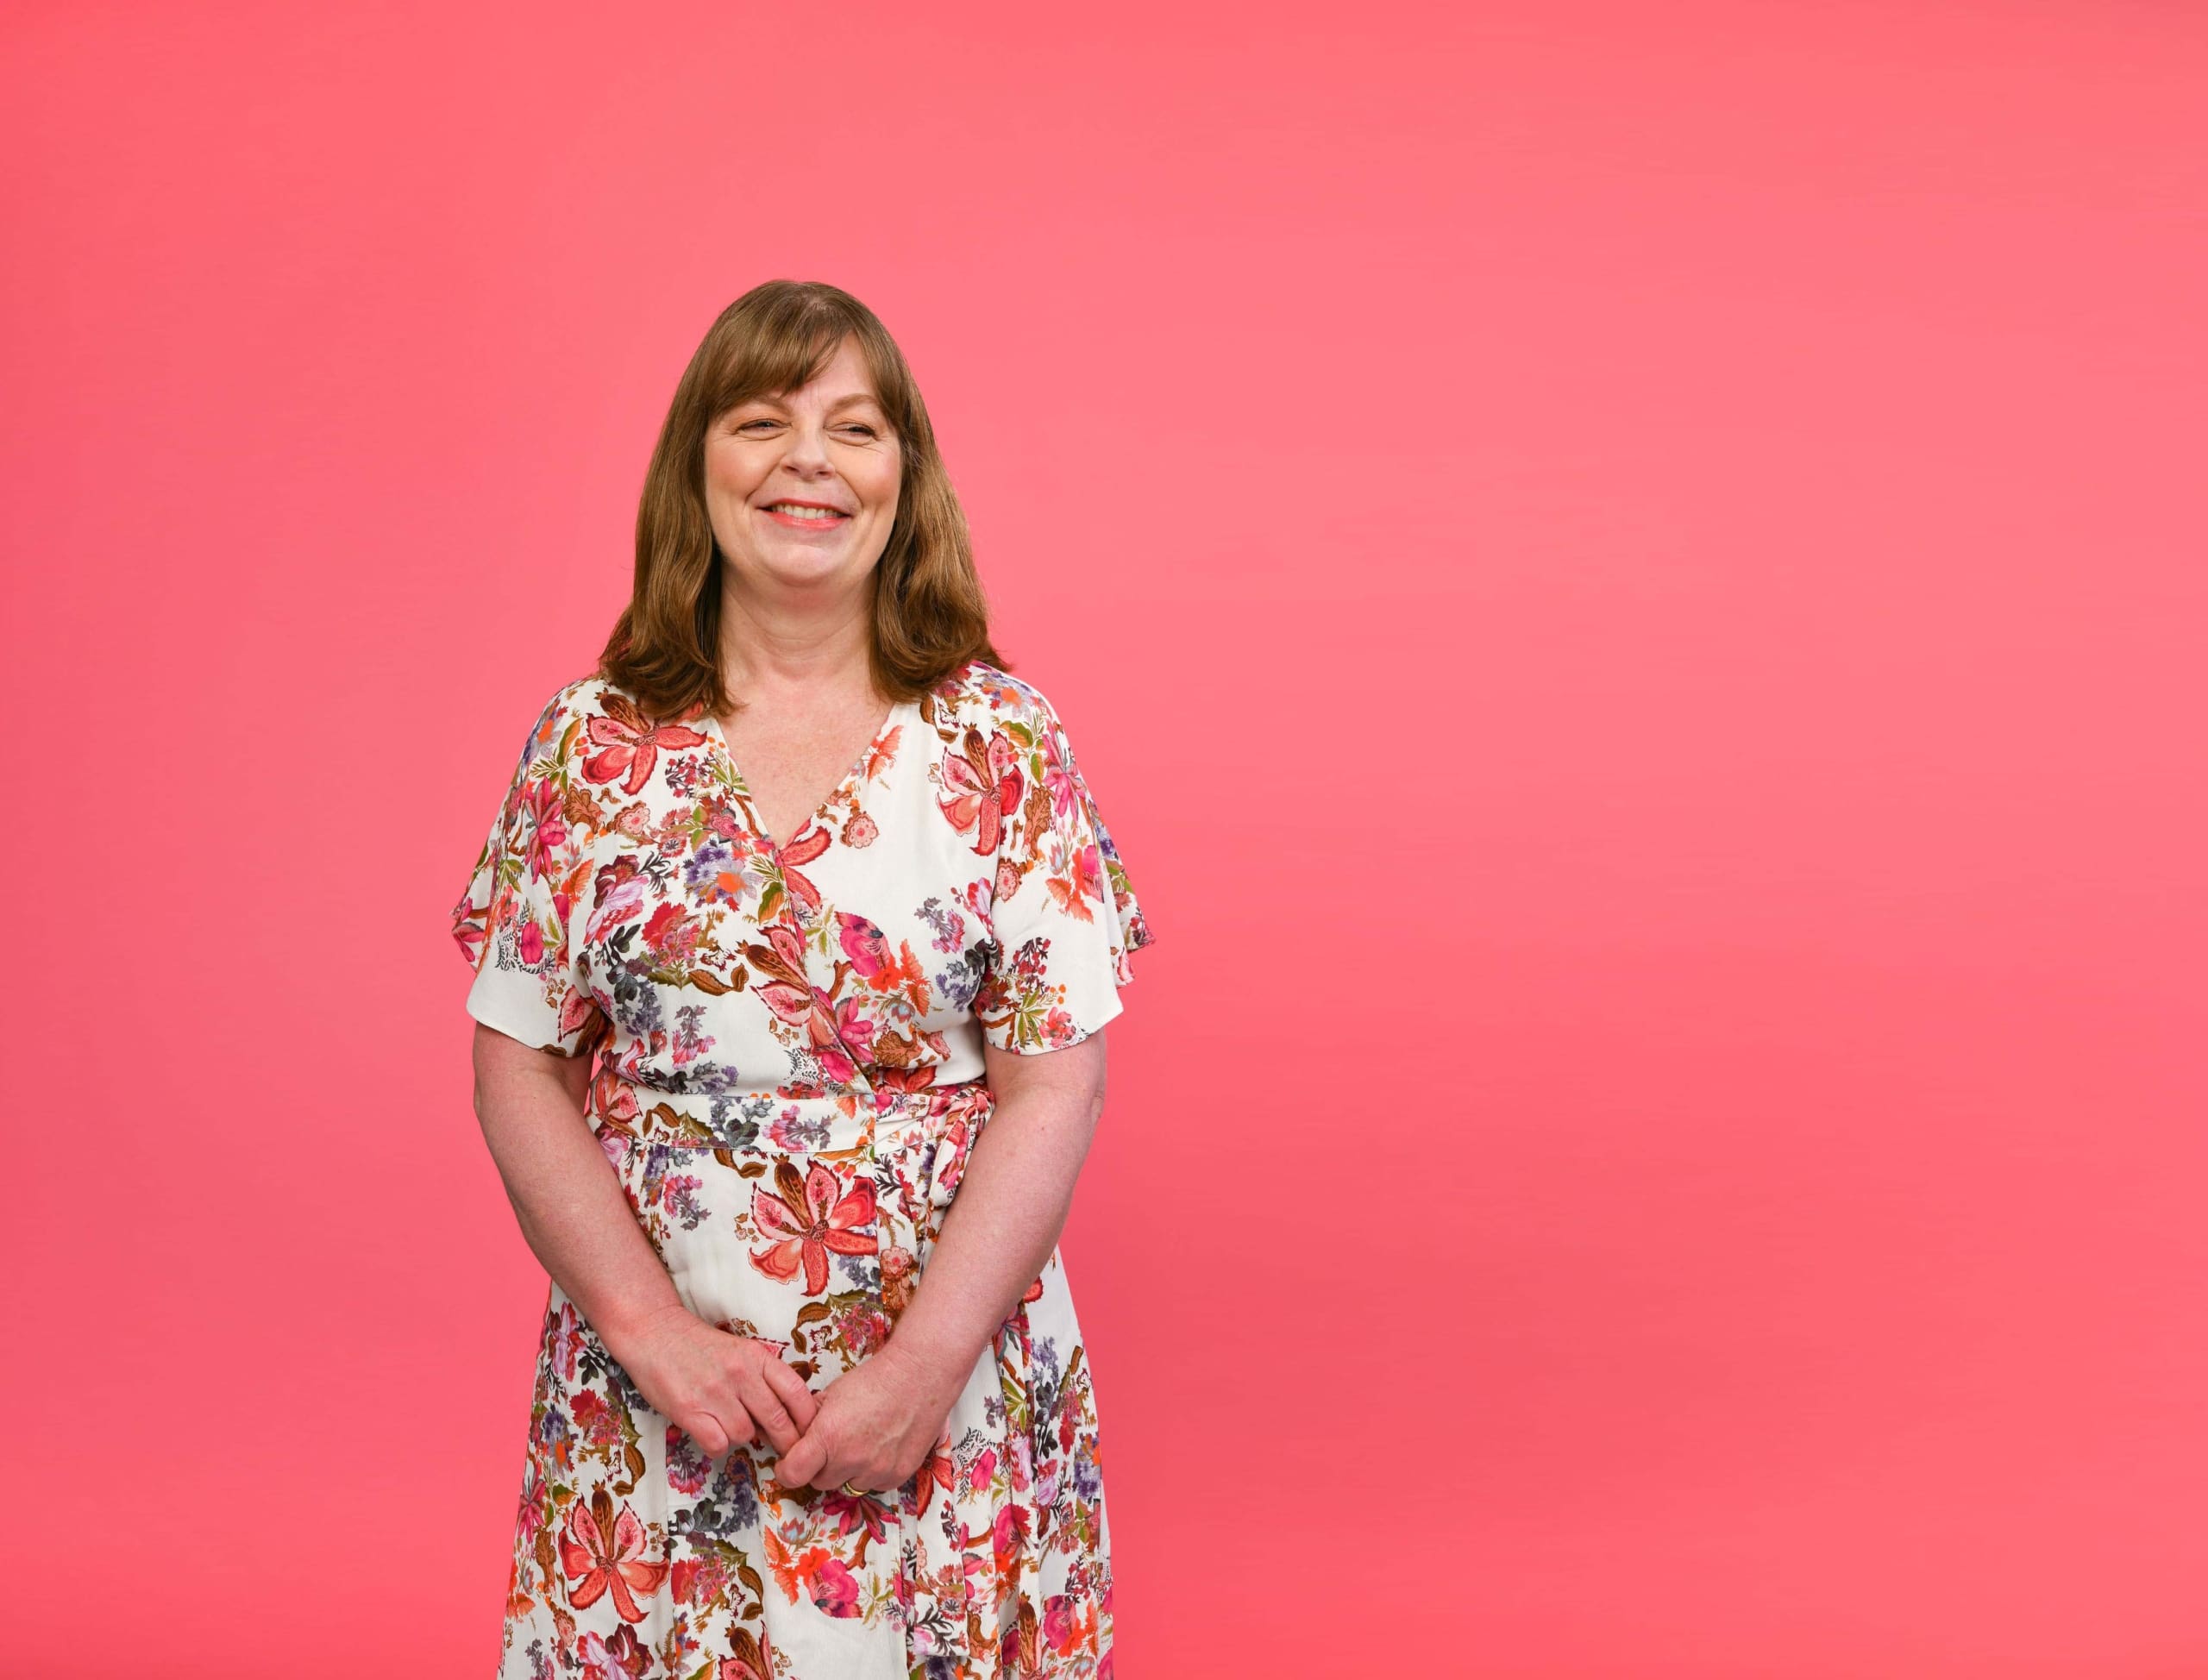 A portrait of Fellow Dr Debbie Nisbet against a pink background